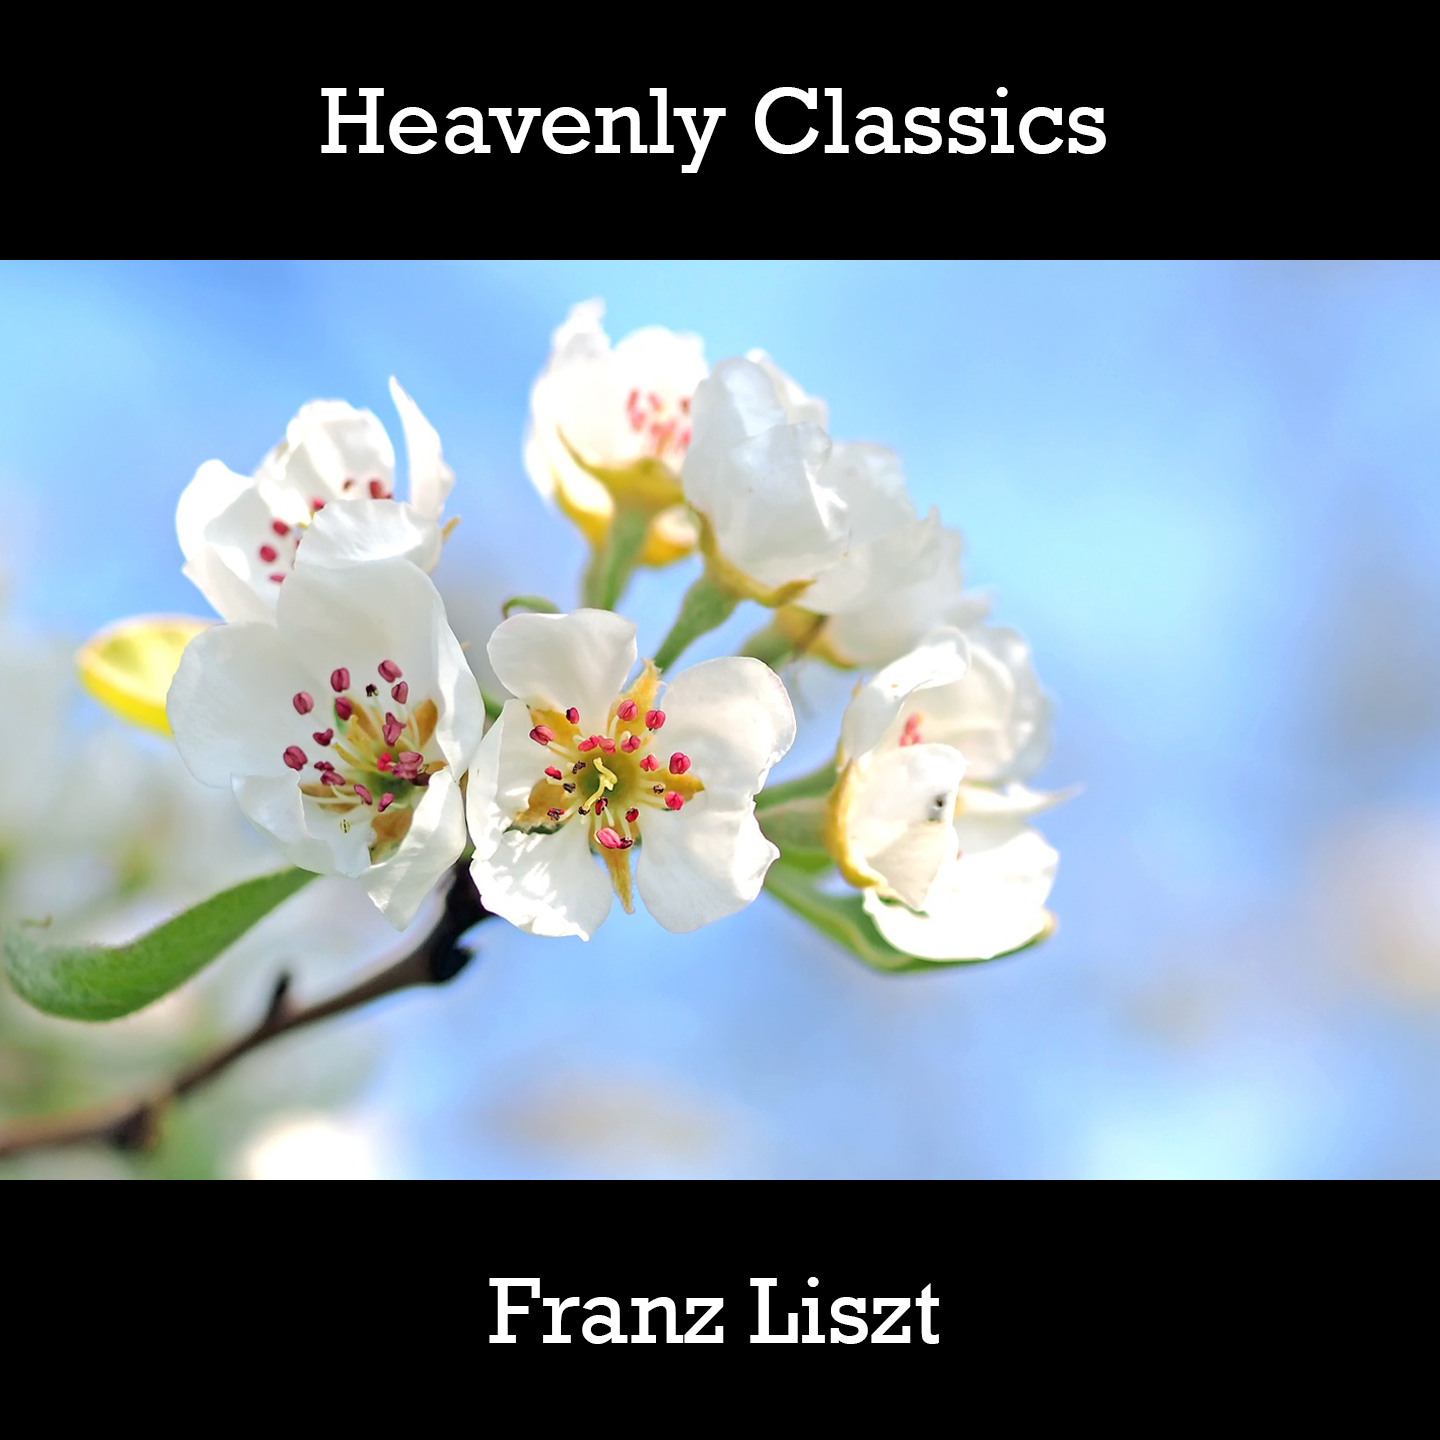 Heavenly Classics Franz Liszt